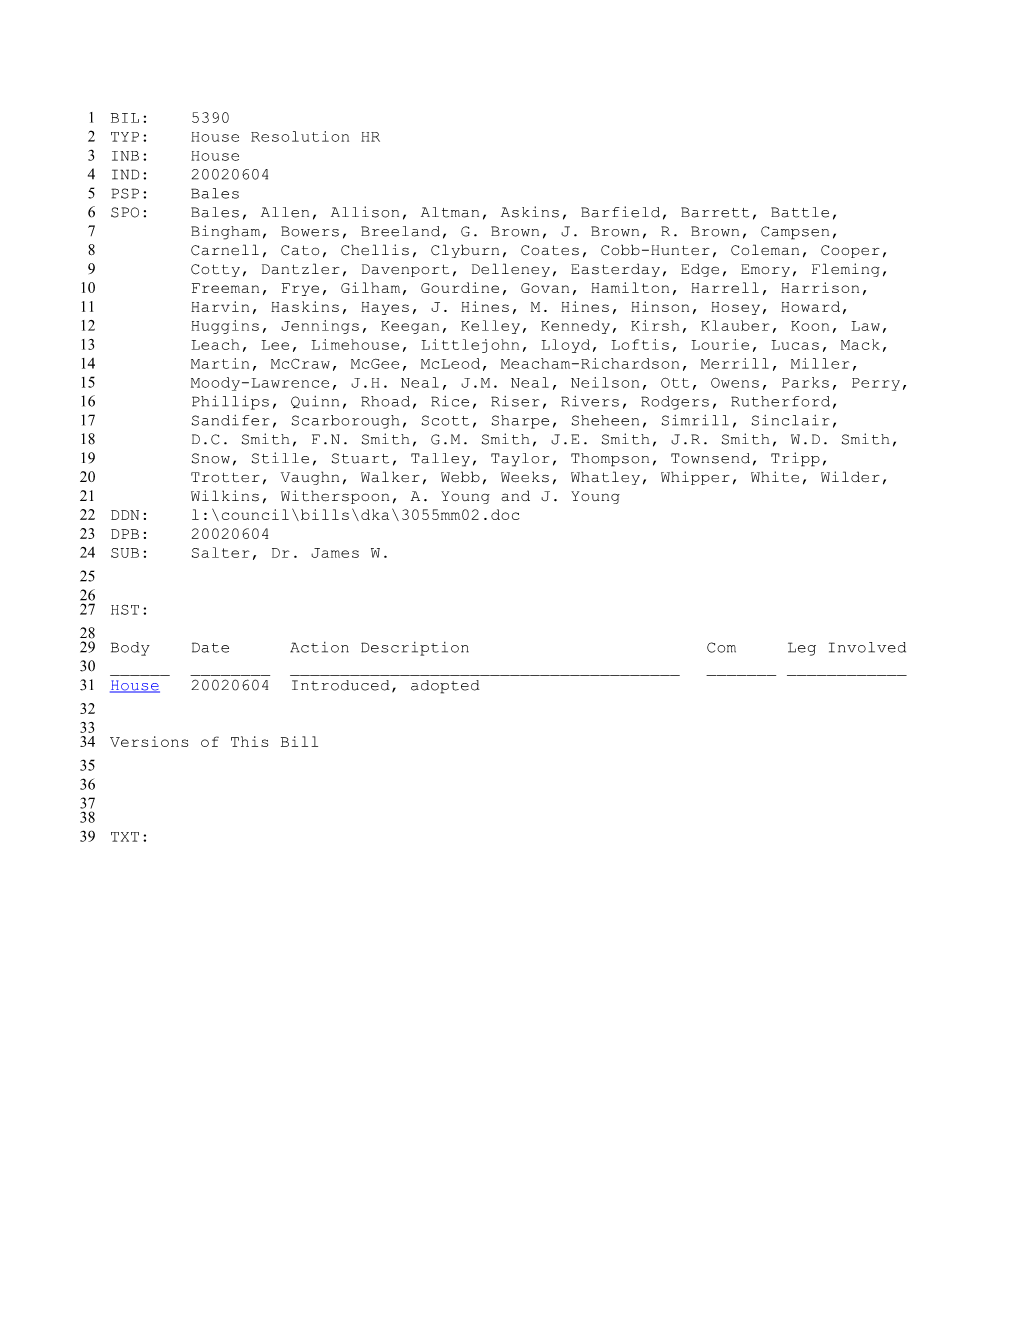 2001-2002 Bill 5390: Salter, Dr. James W. - South Carolina Legislature Online